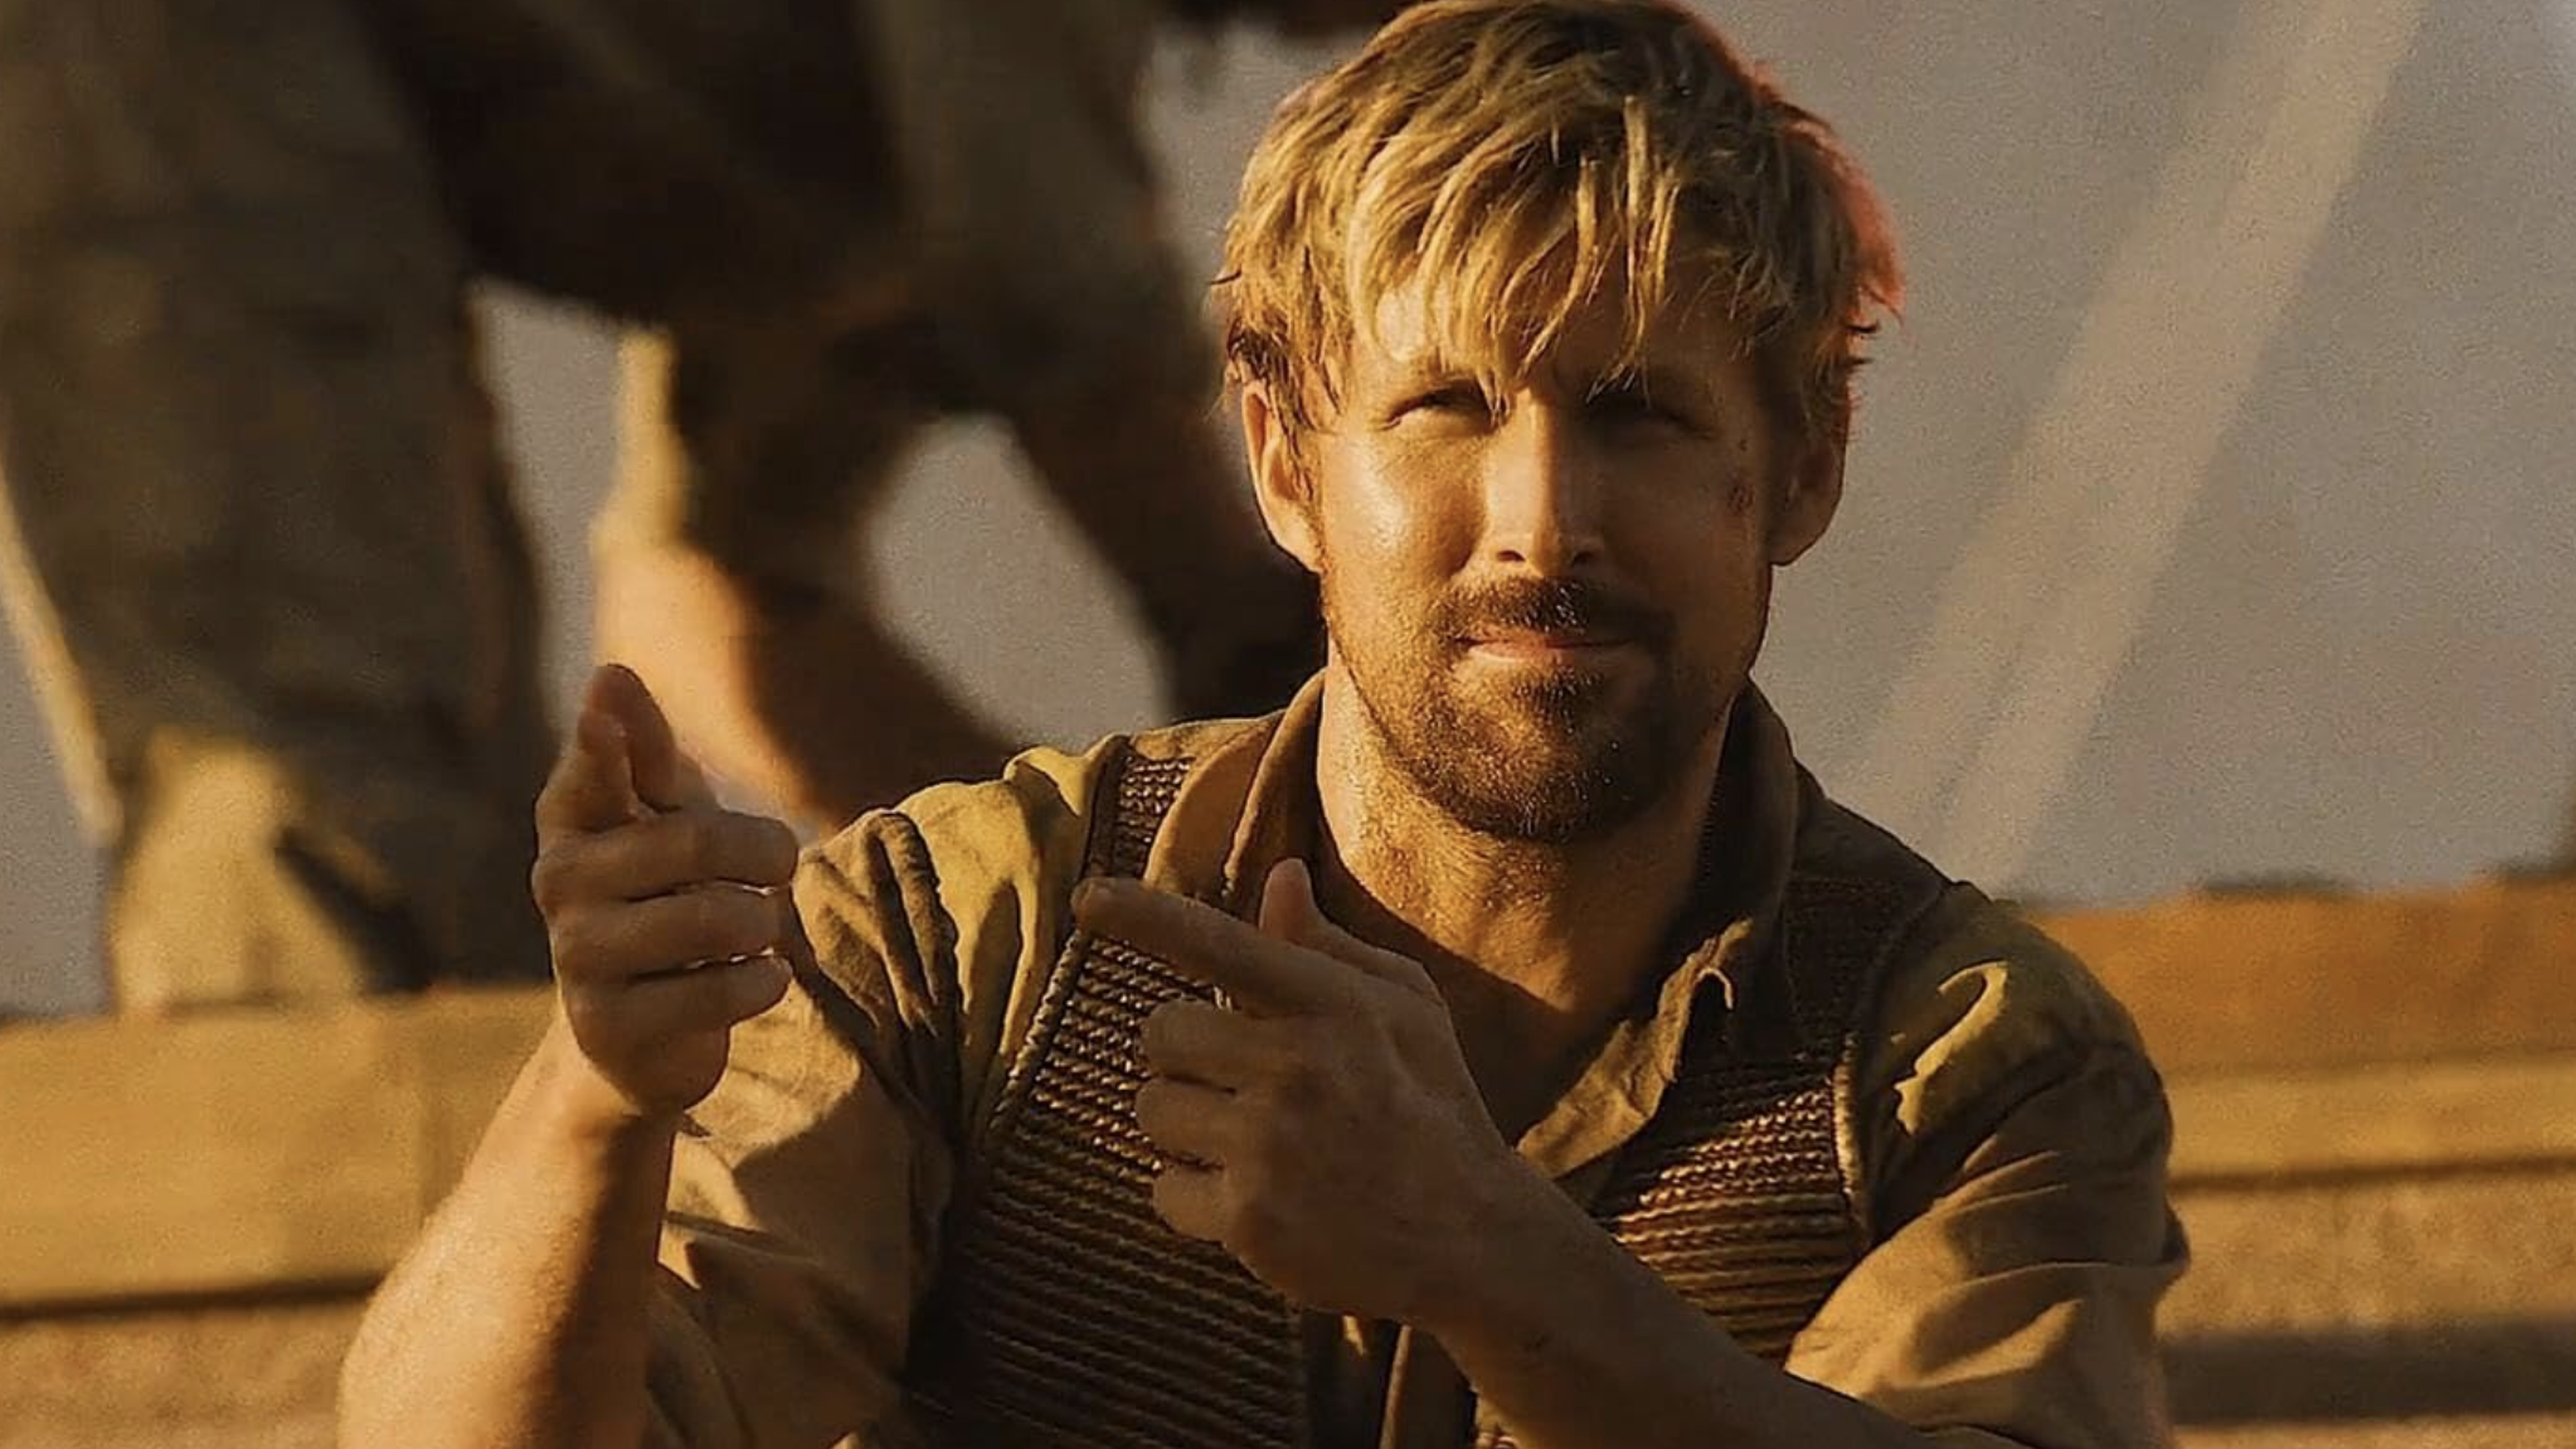 Ryan Gosling stars as washed up stuntman Colt Seaver.